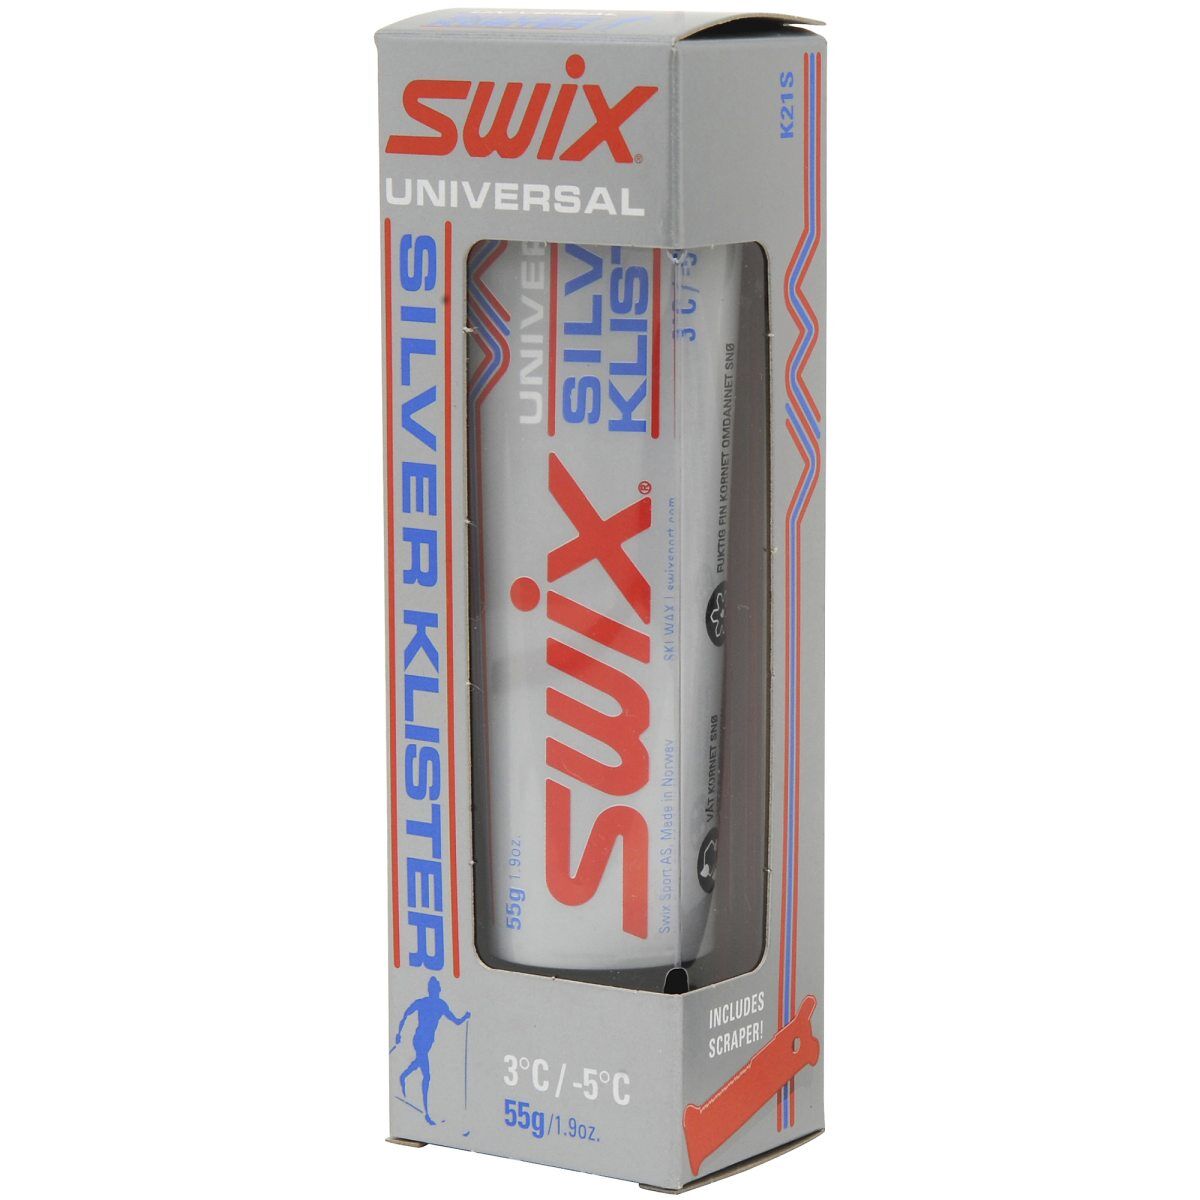 Swix Silver Universal Klister K21S, 55g  2018